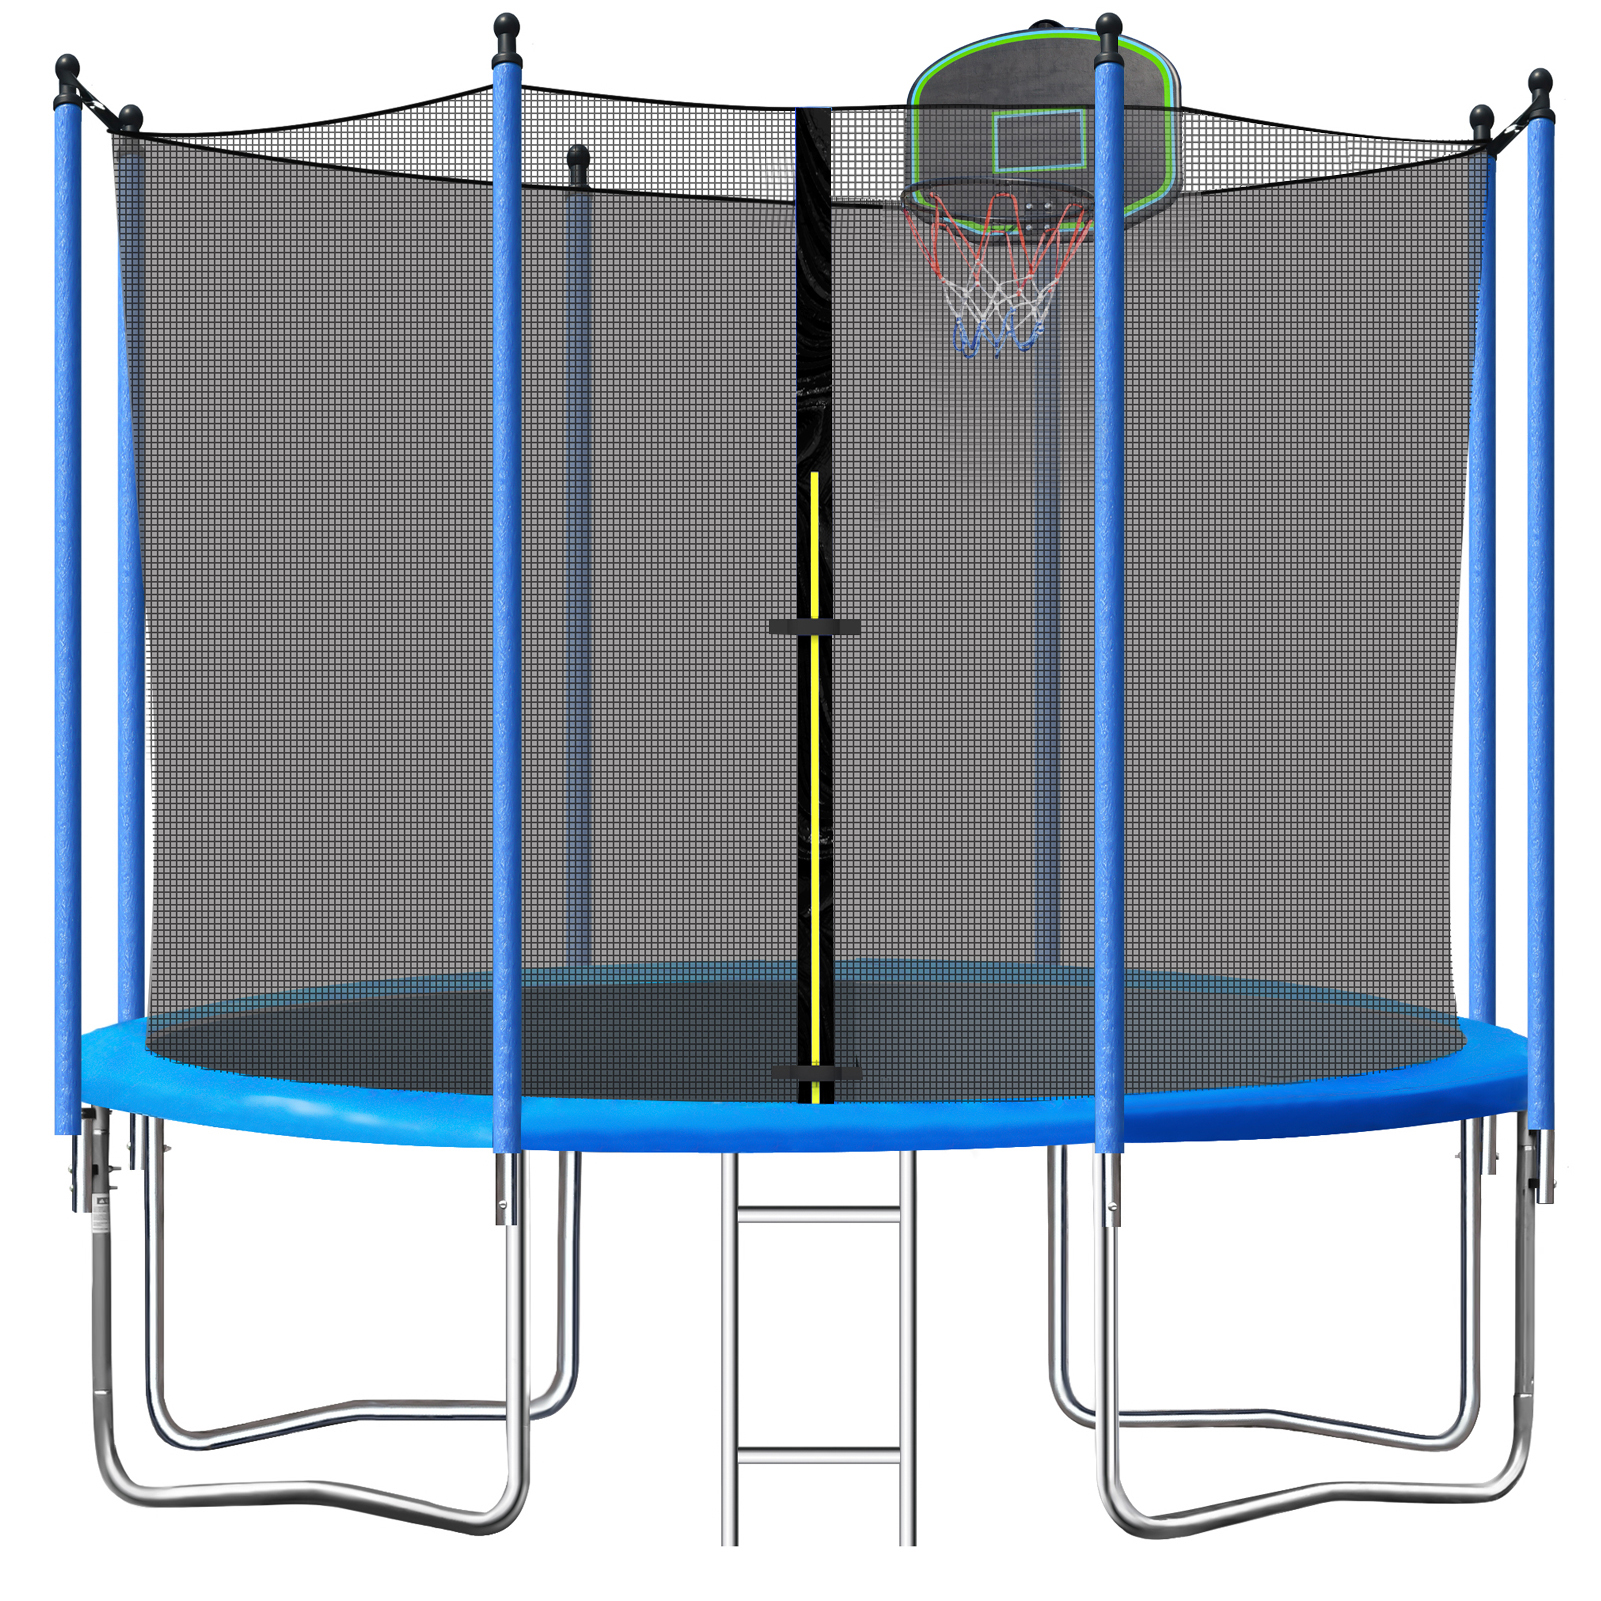 SEGMART 10ft Trampoline for Kids with Basketball Hoop and Enclosure Net/Ladder,Blue - image 1 of 7